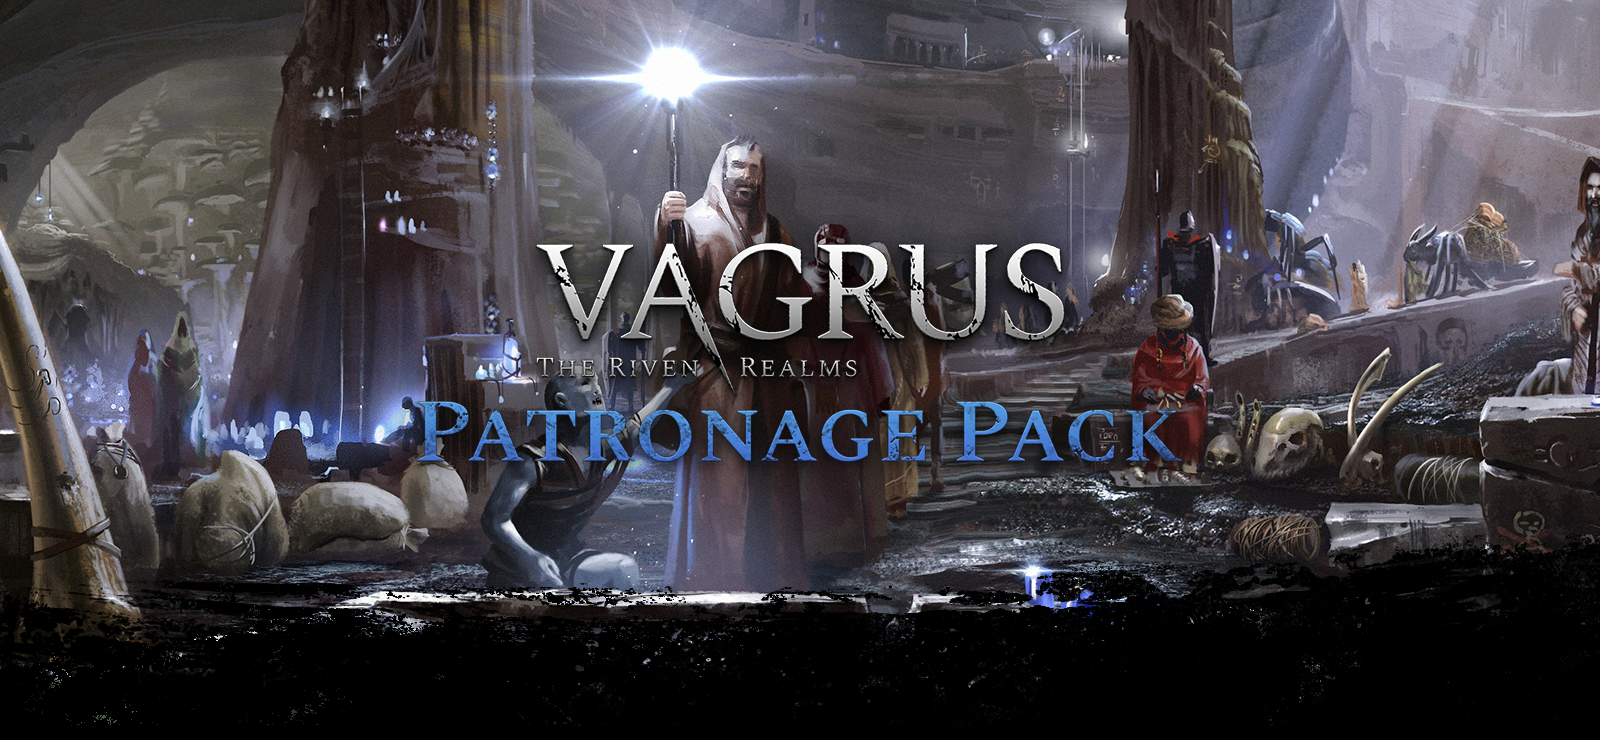 Vagrus - The Riven Realms Patronage Pack